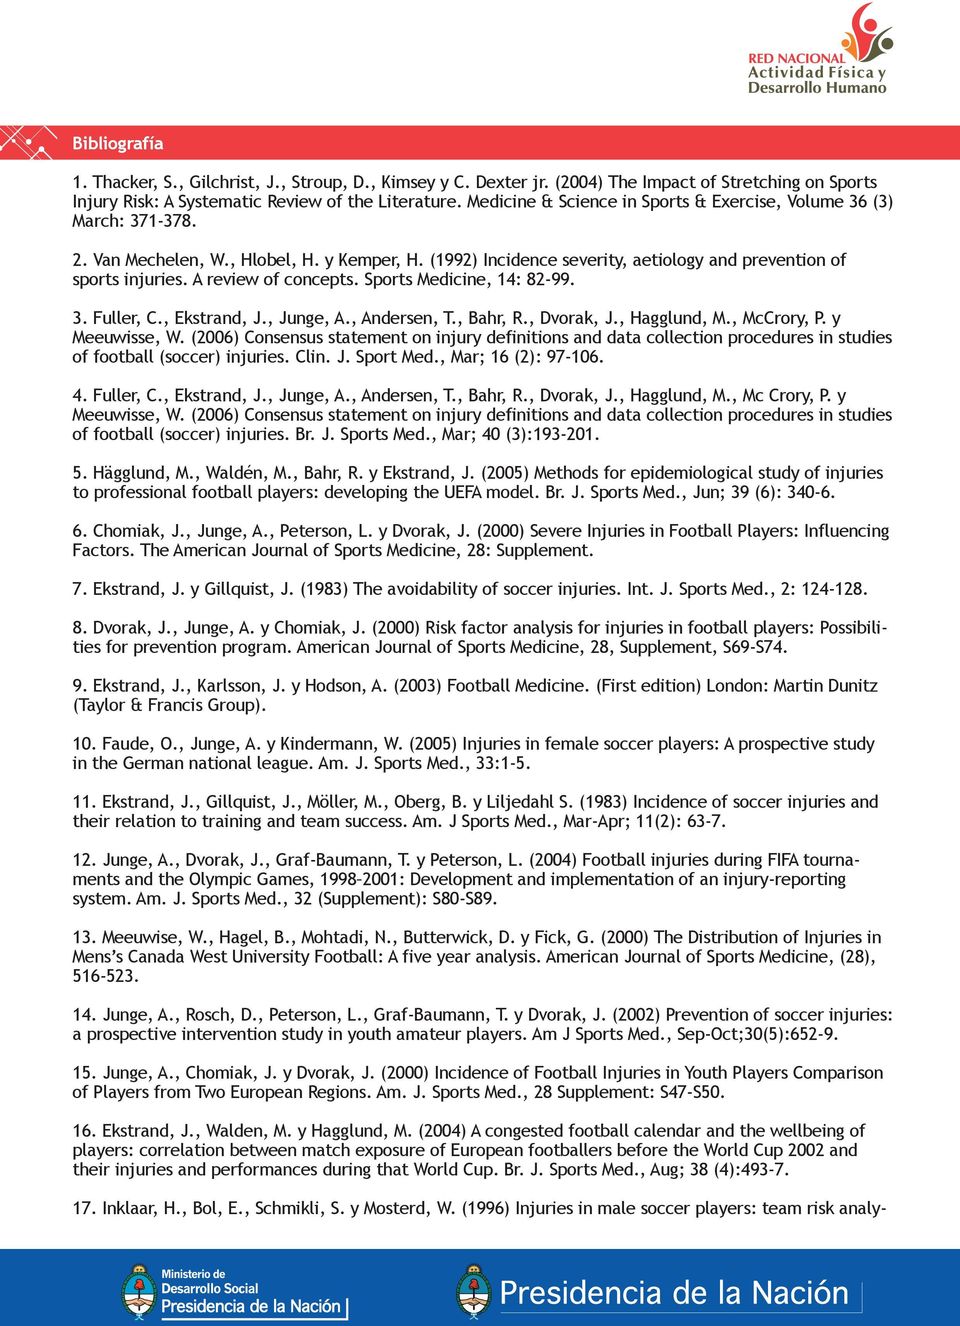 A review of concepts. Sports Medicine, 14: 82-99. 3. Fuller, C., Ekstrand, J., Junge, A., Andersen, T., Bahr, R., Dvorak, J., Hagglund, M., McCrory, P. y Meeuwisse, W.